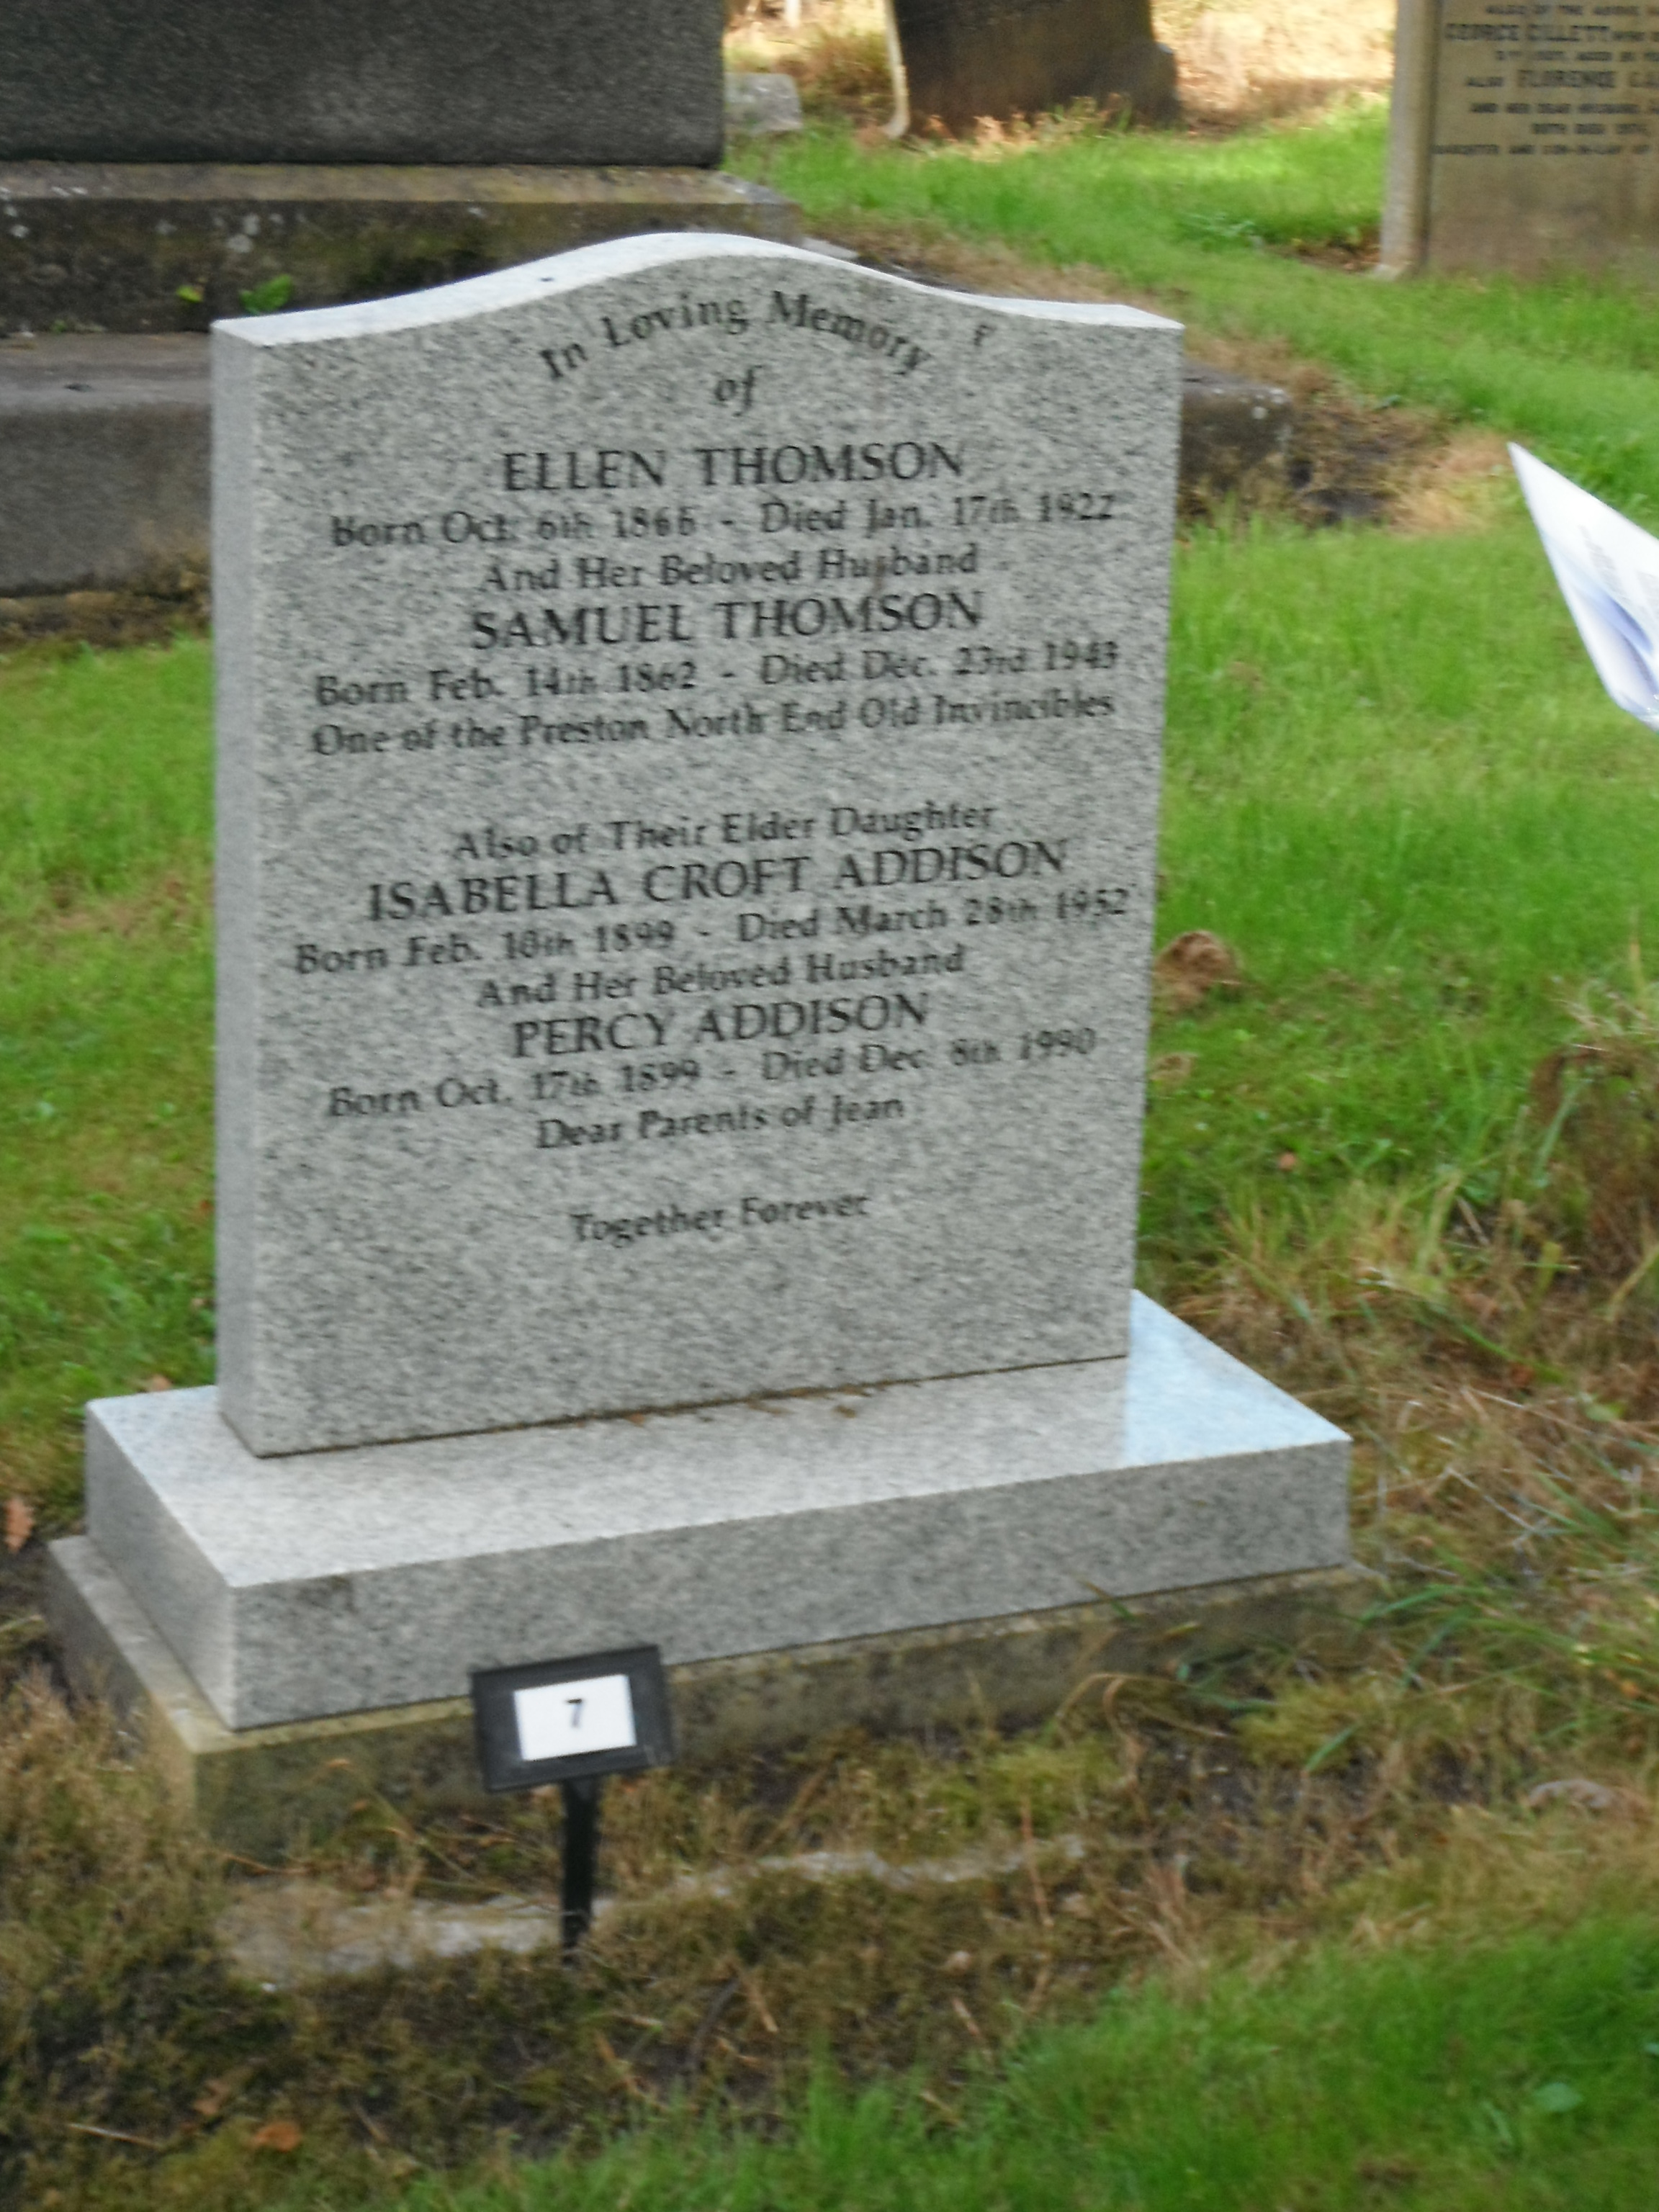 Photo taken by me - grave marker - Preston cemetery 